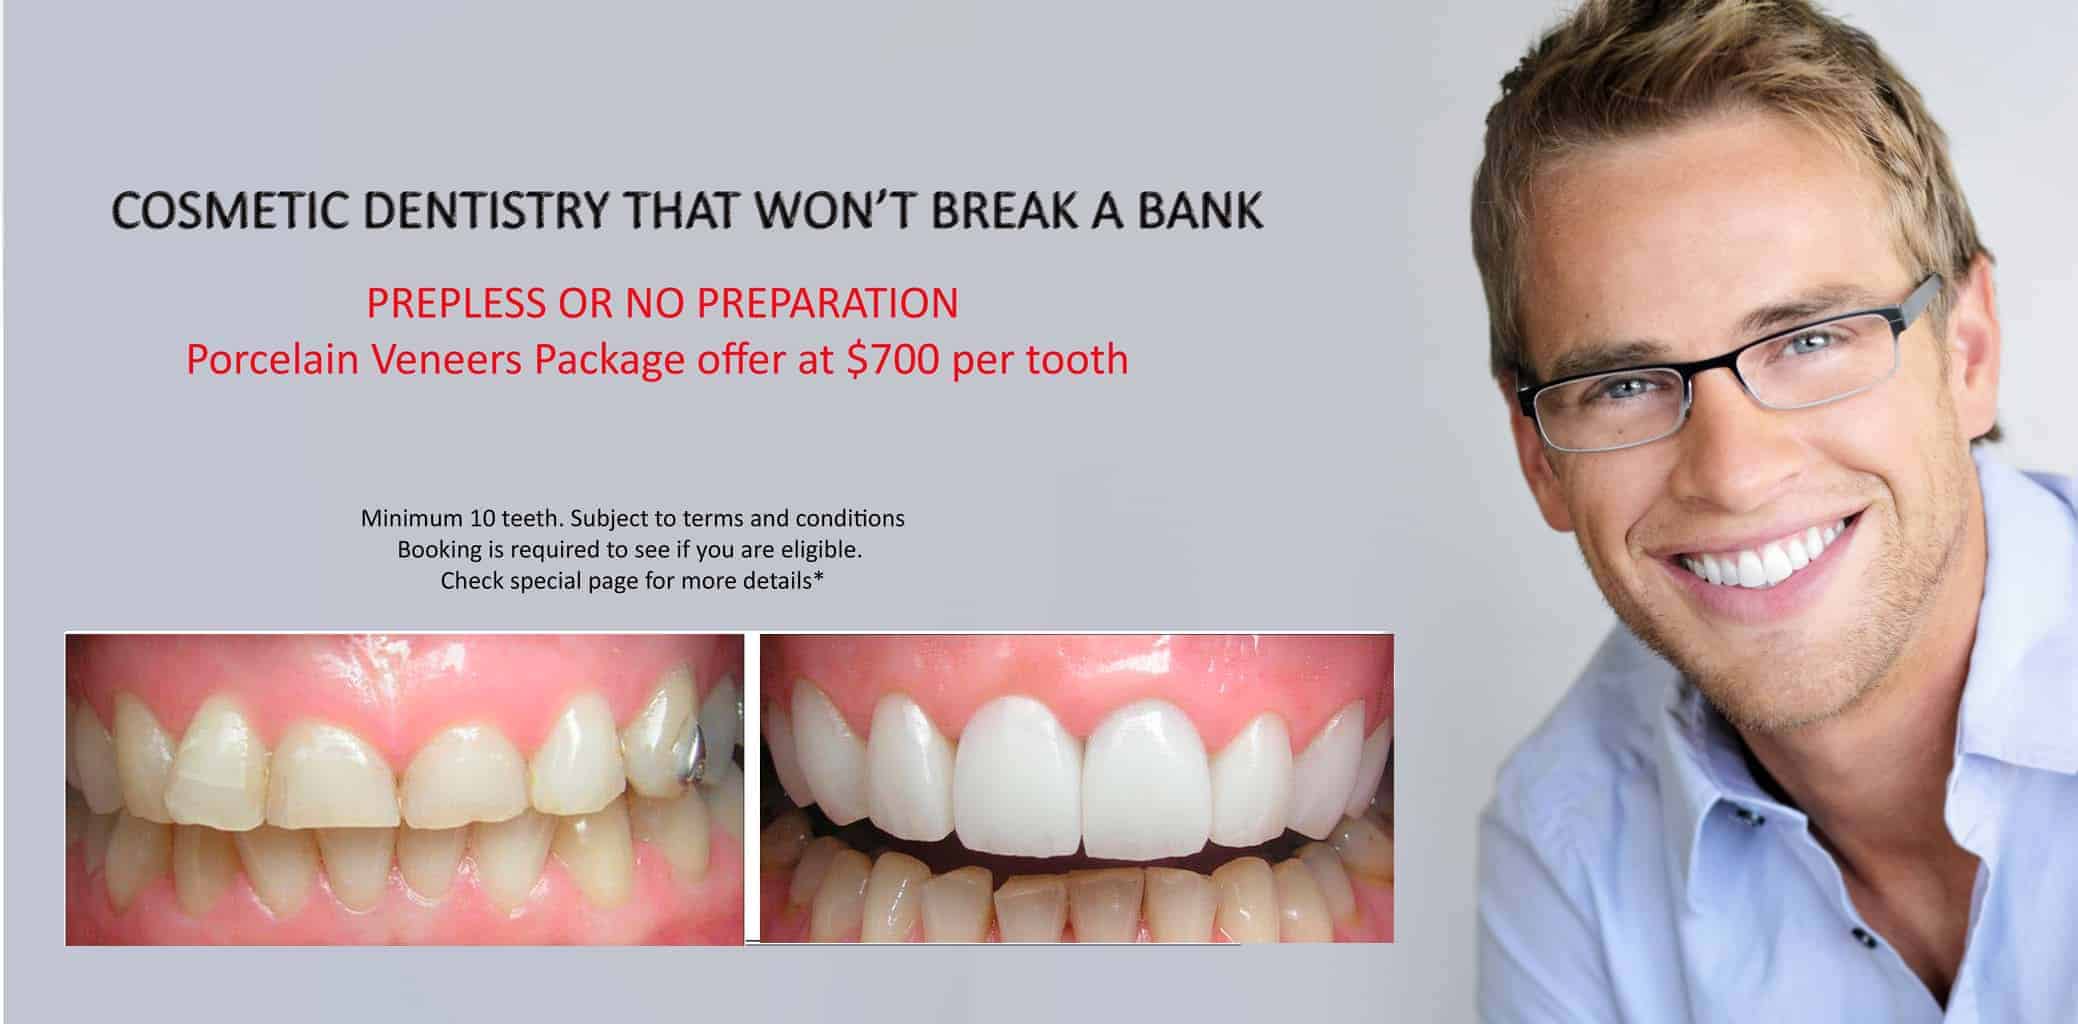 General Dentistry Melbourne Services - Best Dentist in Melbourne CBD - Best Dental Clinic in Melbourne CBD